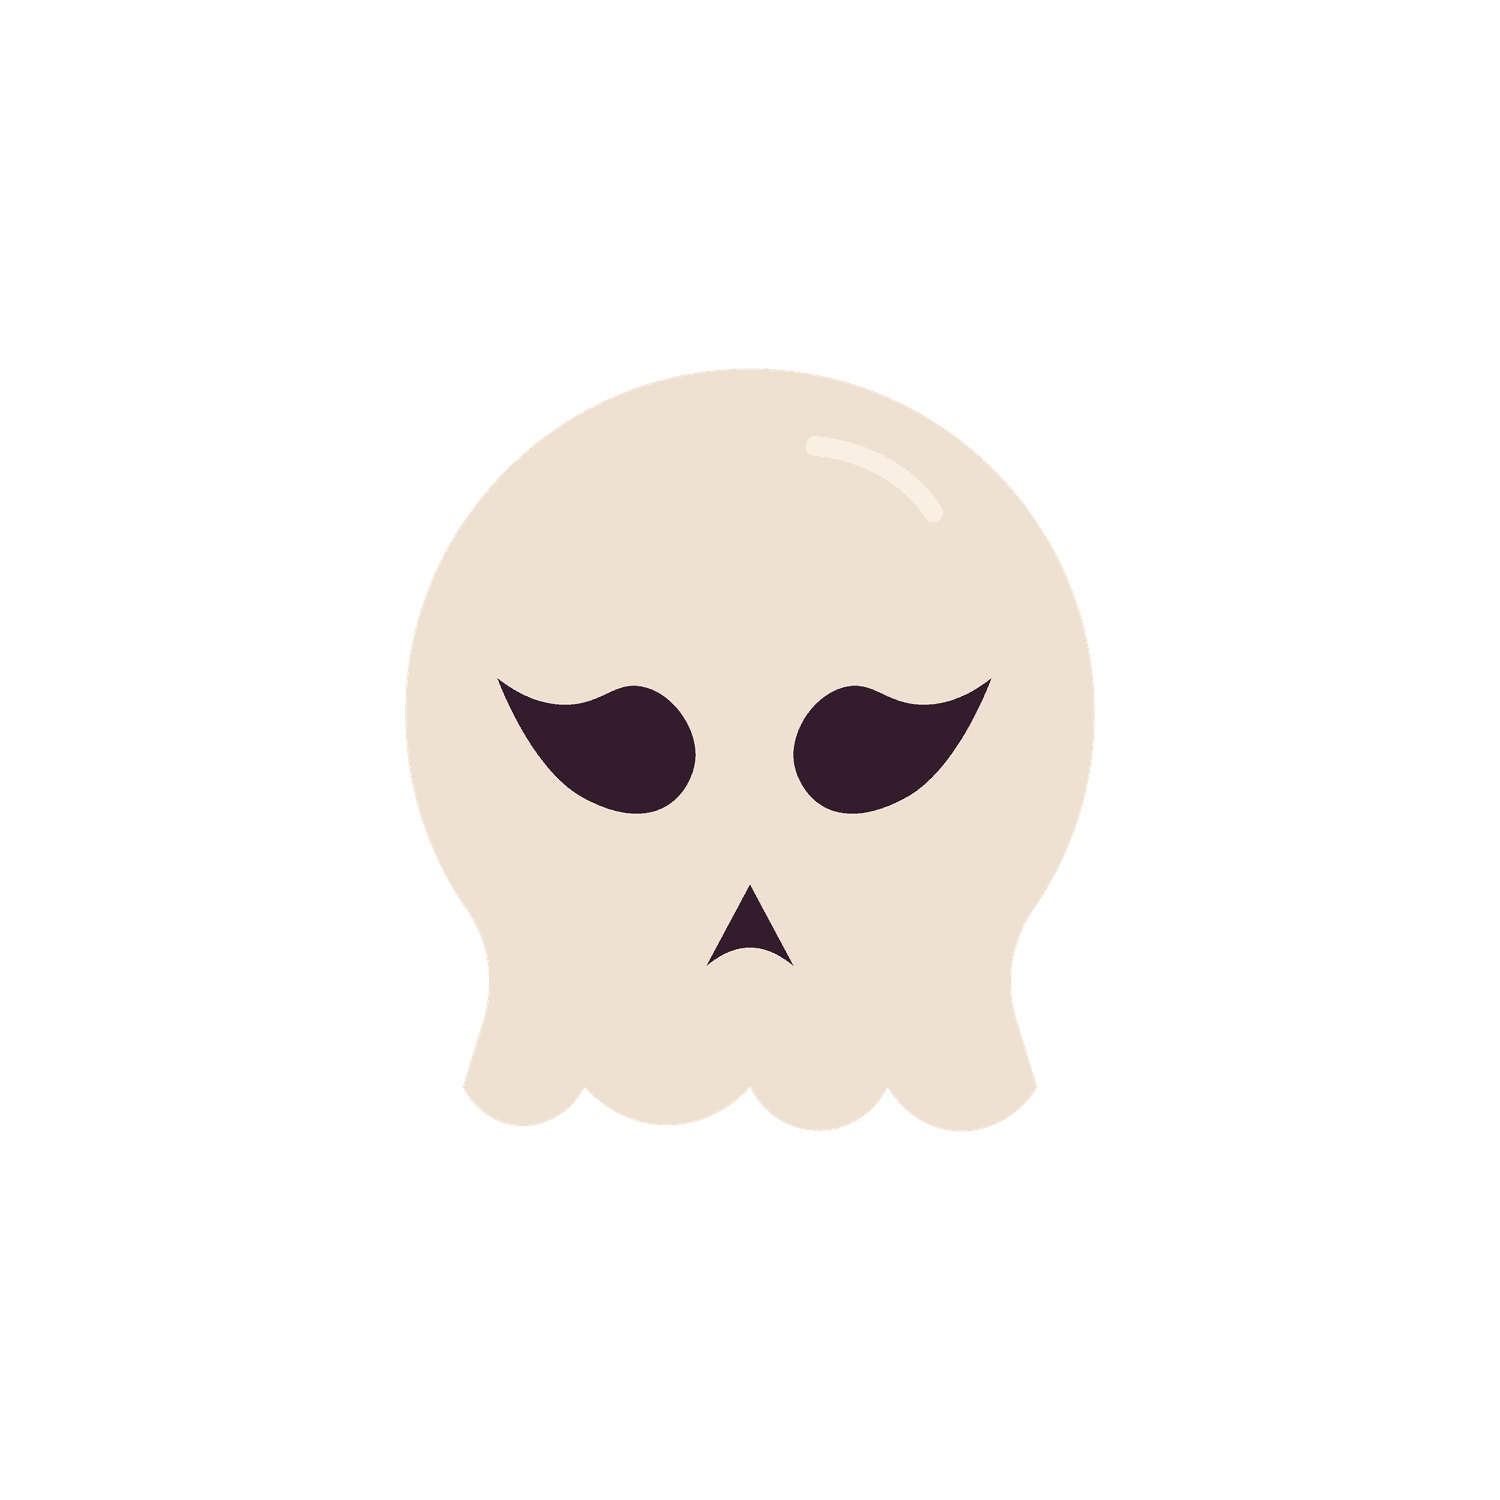 halloween skull and ghost element illustration